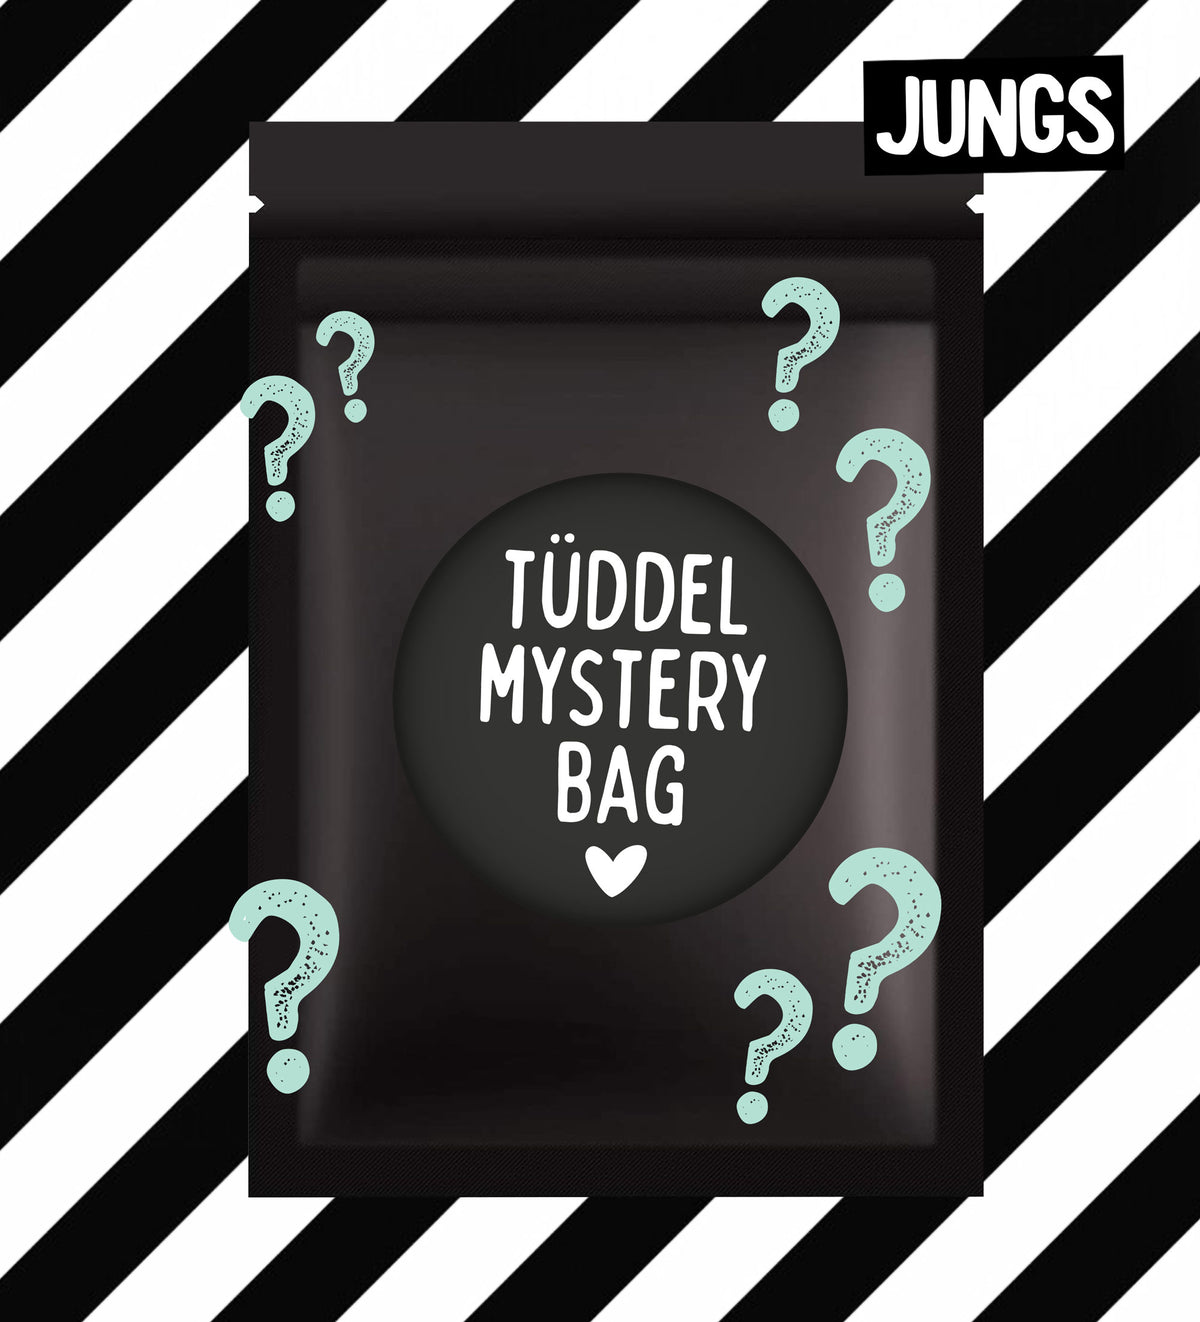 Tüddel Mystery Bag - Jungs *NOVEMBER*